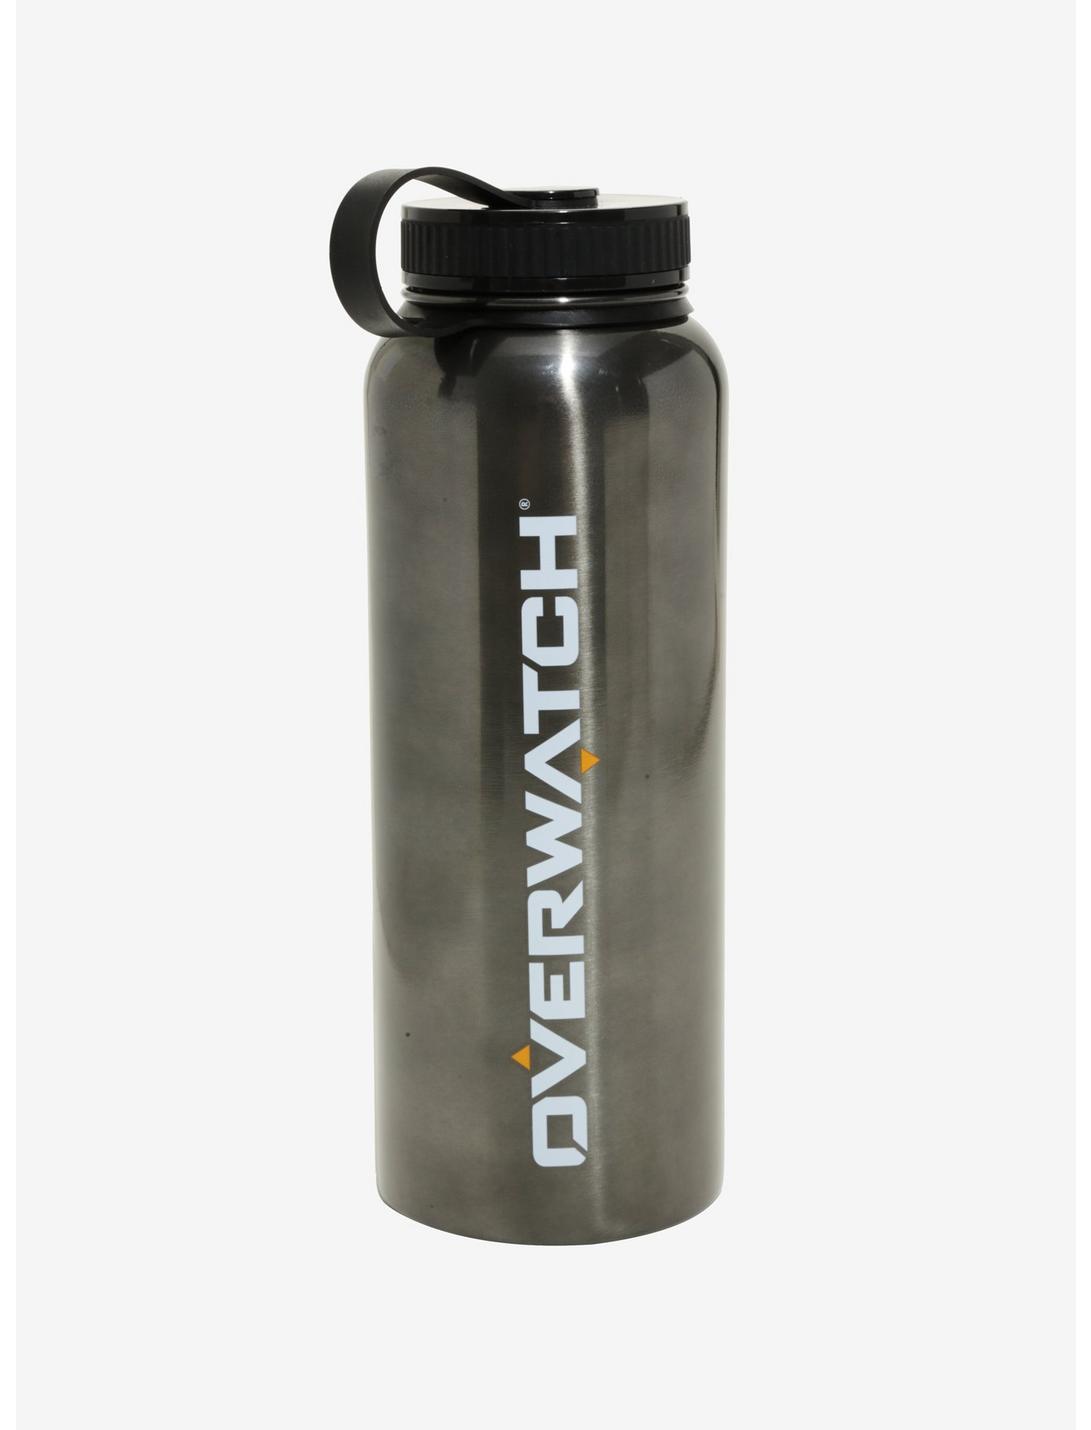 Overwatch Stainless Steel Water Bottle, , hi-res